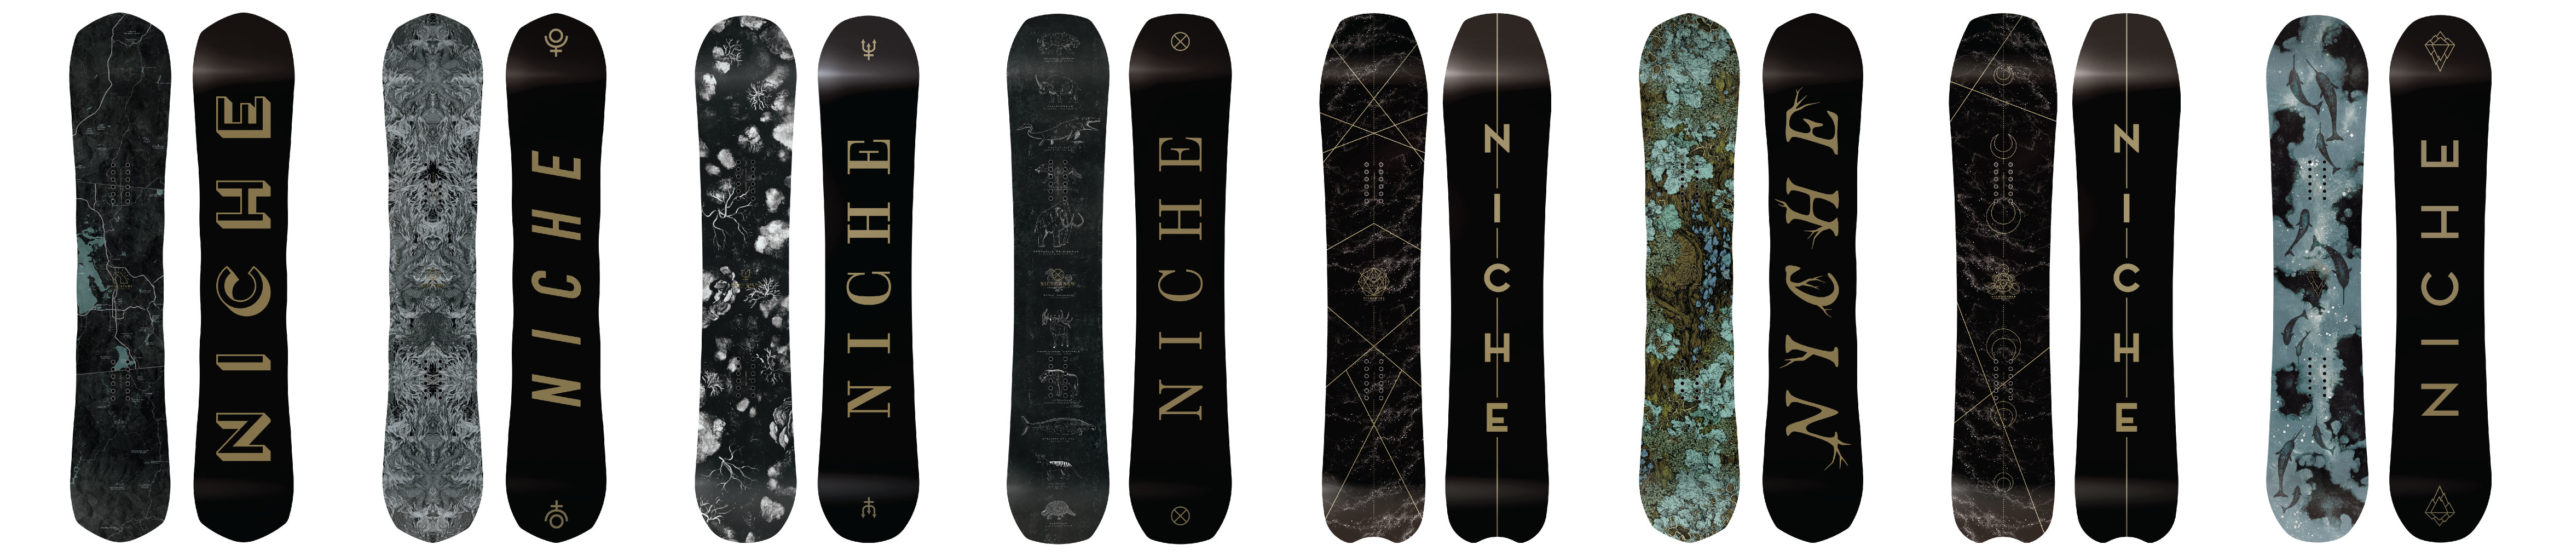 2018/19 Niche Snowboards graphics